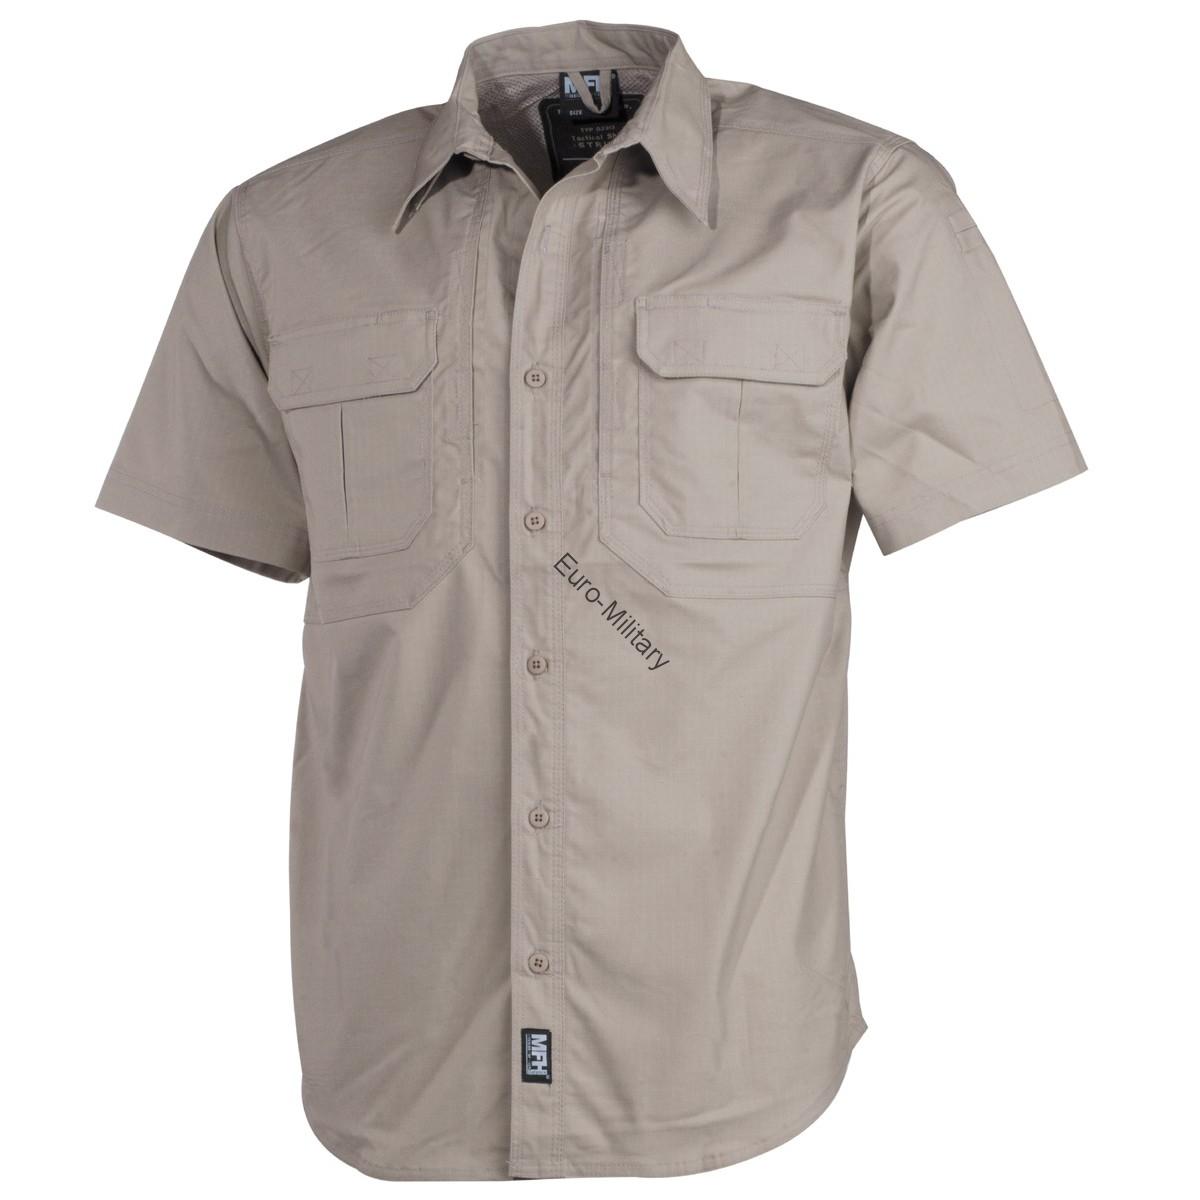 High Level Tactical Rip Stop Shirt "Strike" Short Sleeve Teflon - New - Khaki